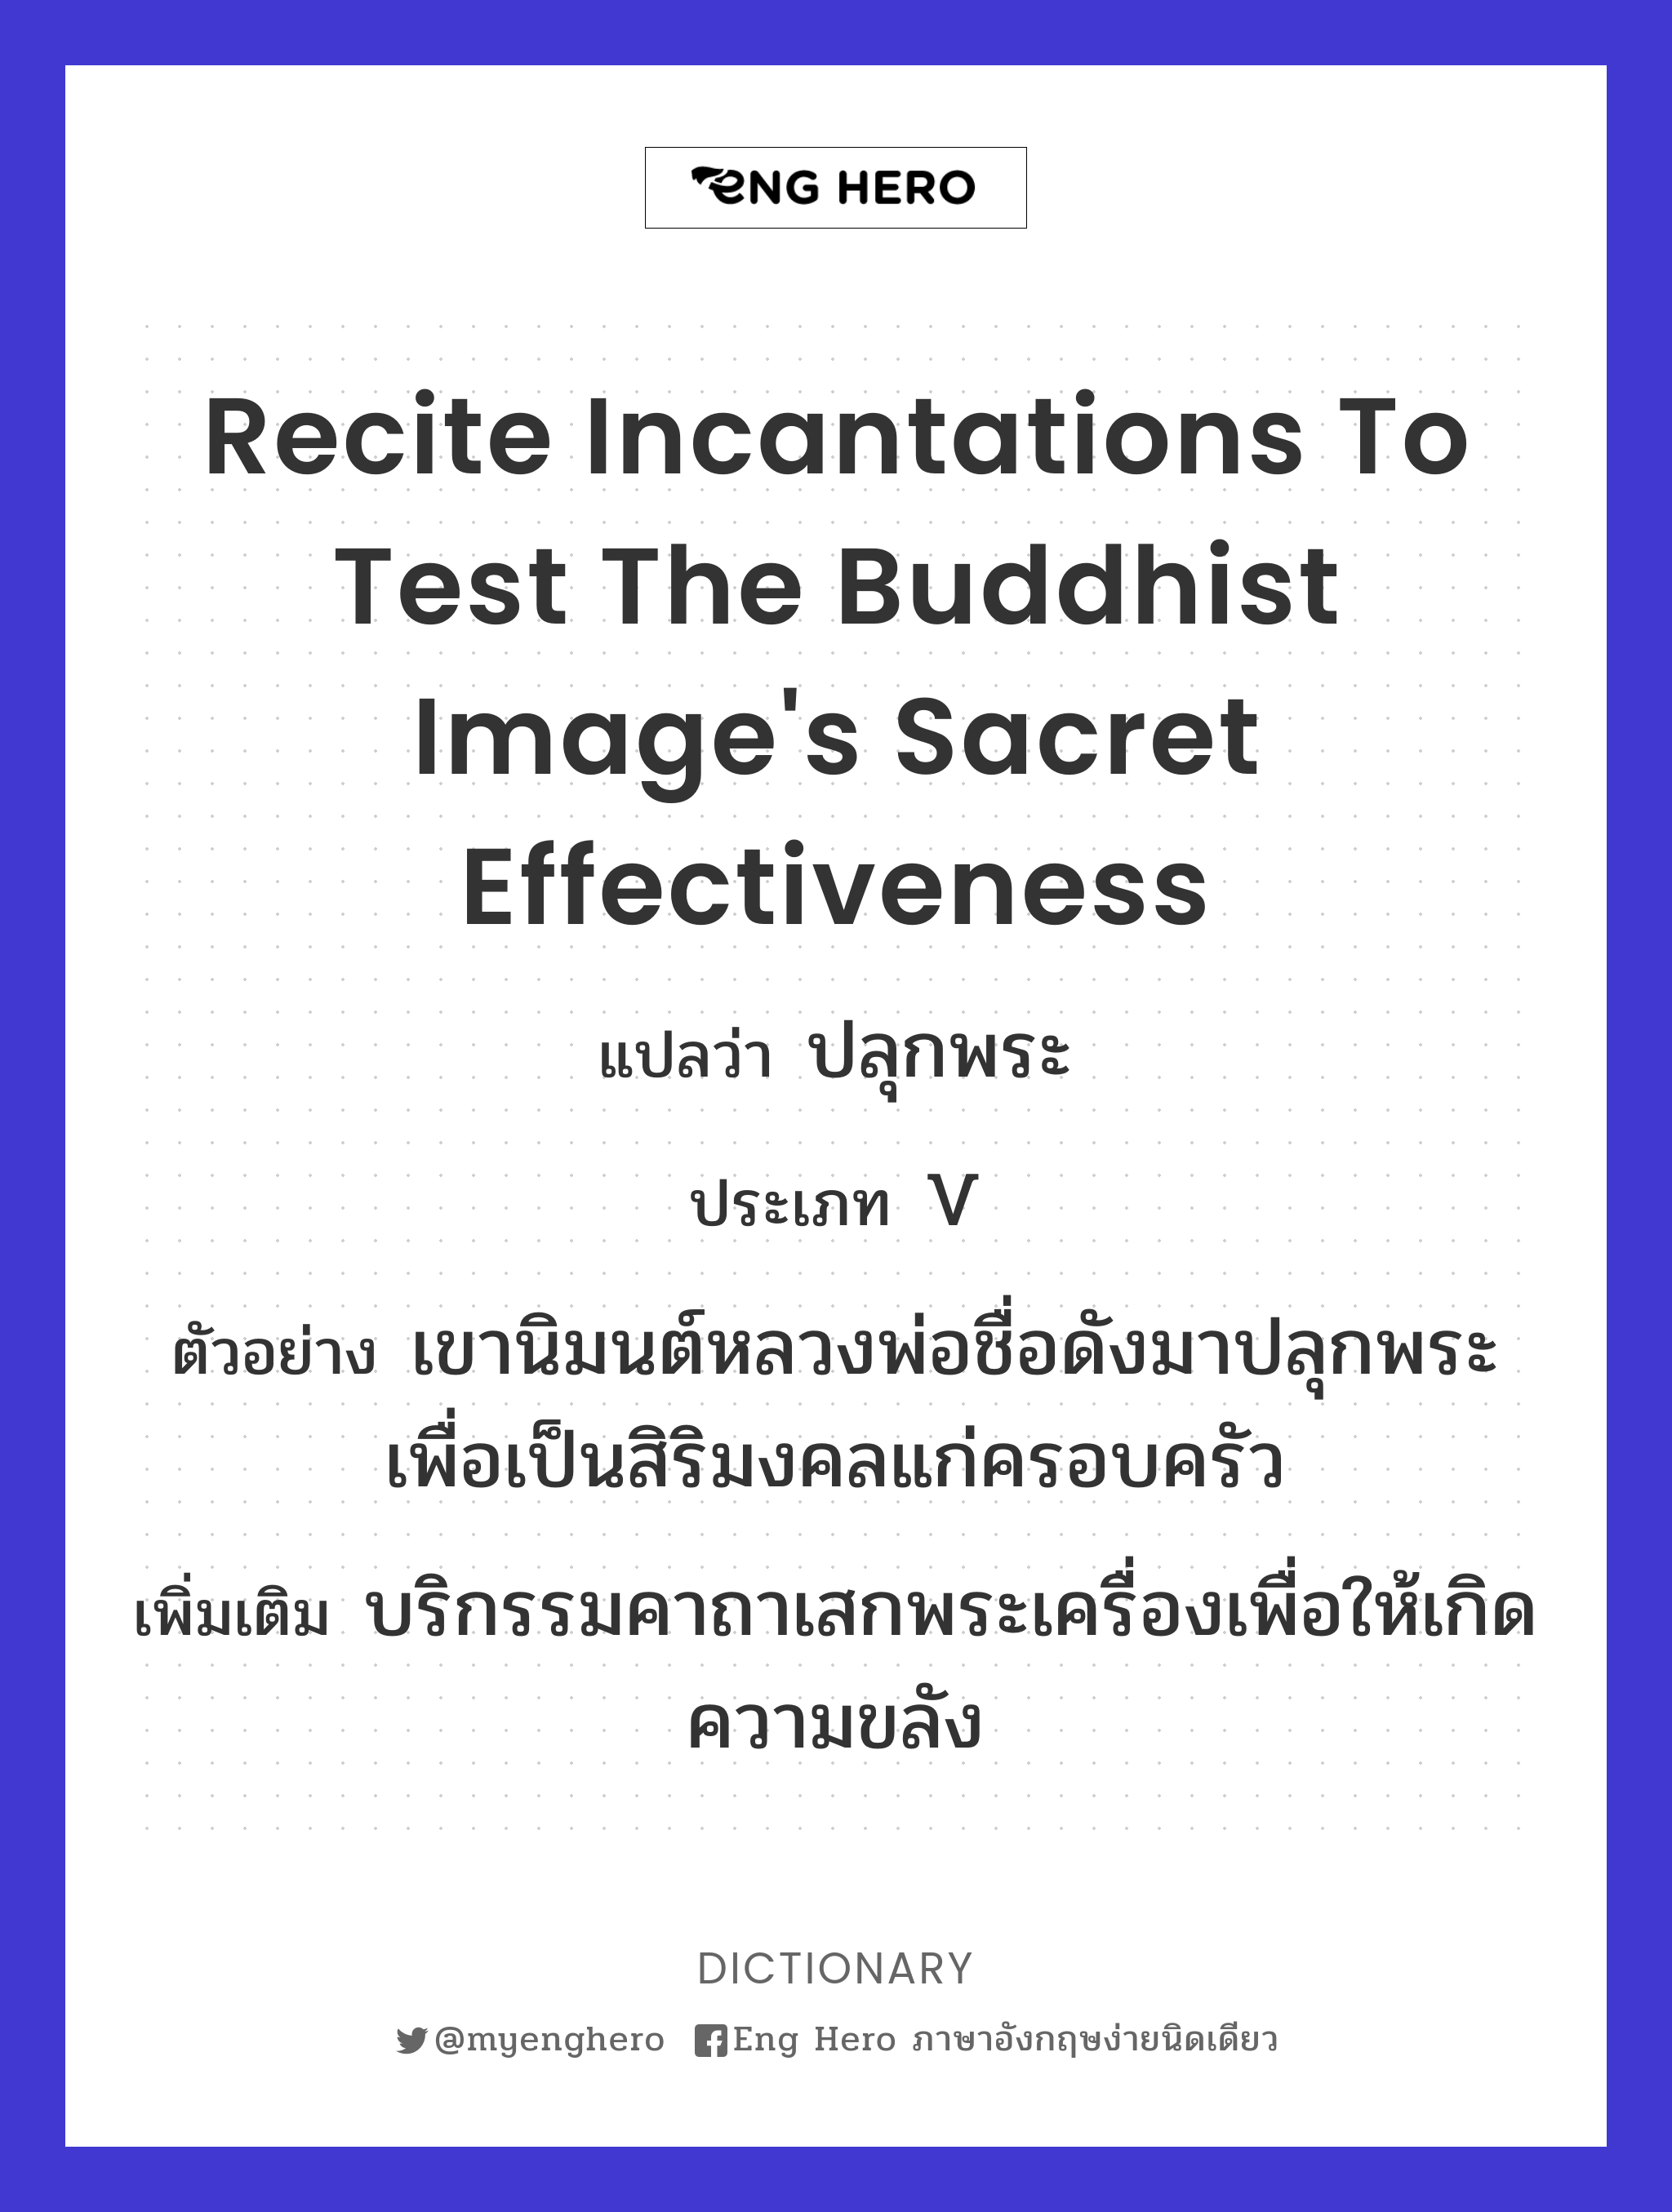 recite incantations to test the Buddhist image's sacret effectiveness